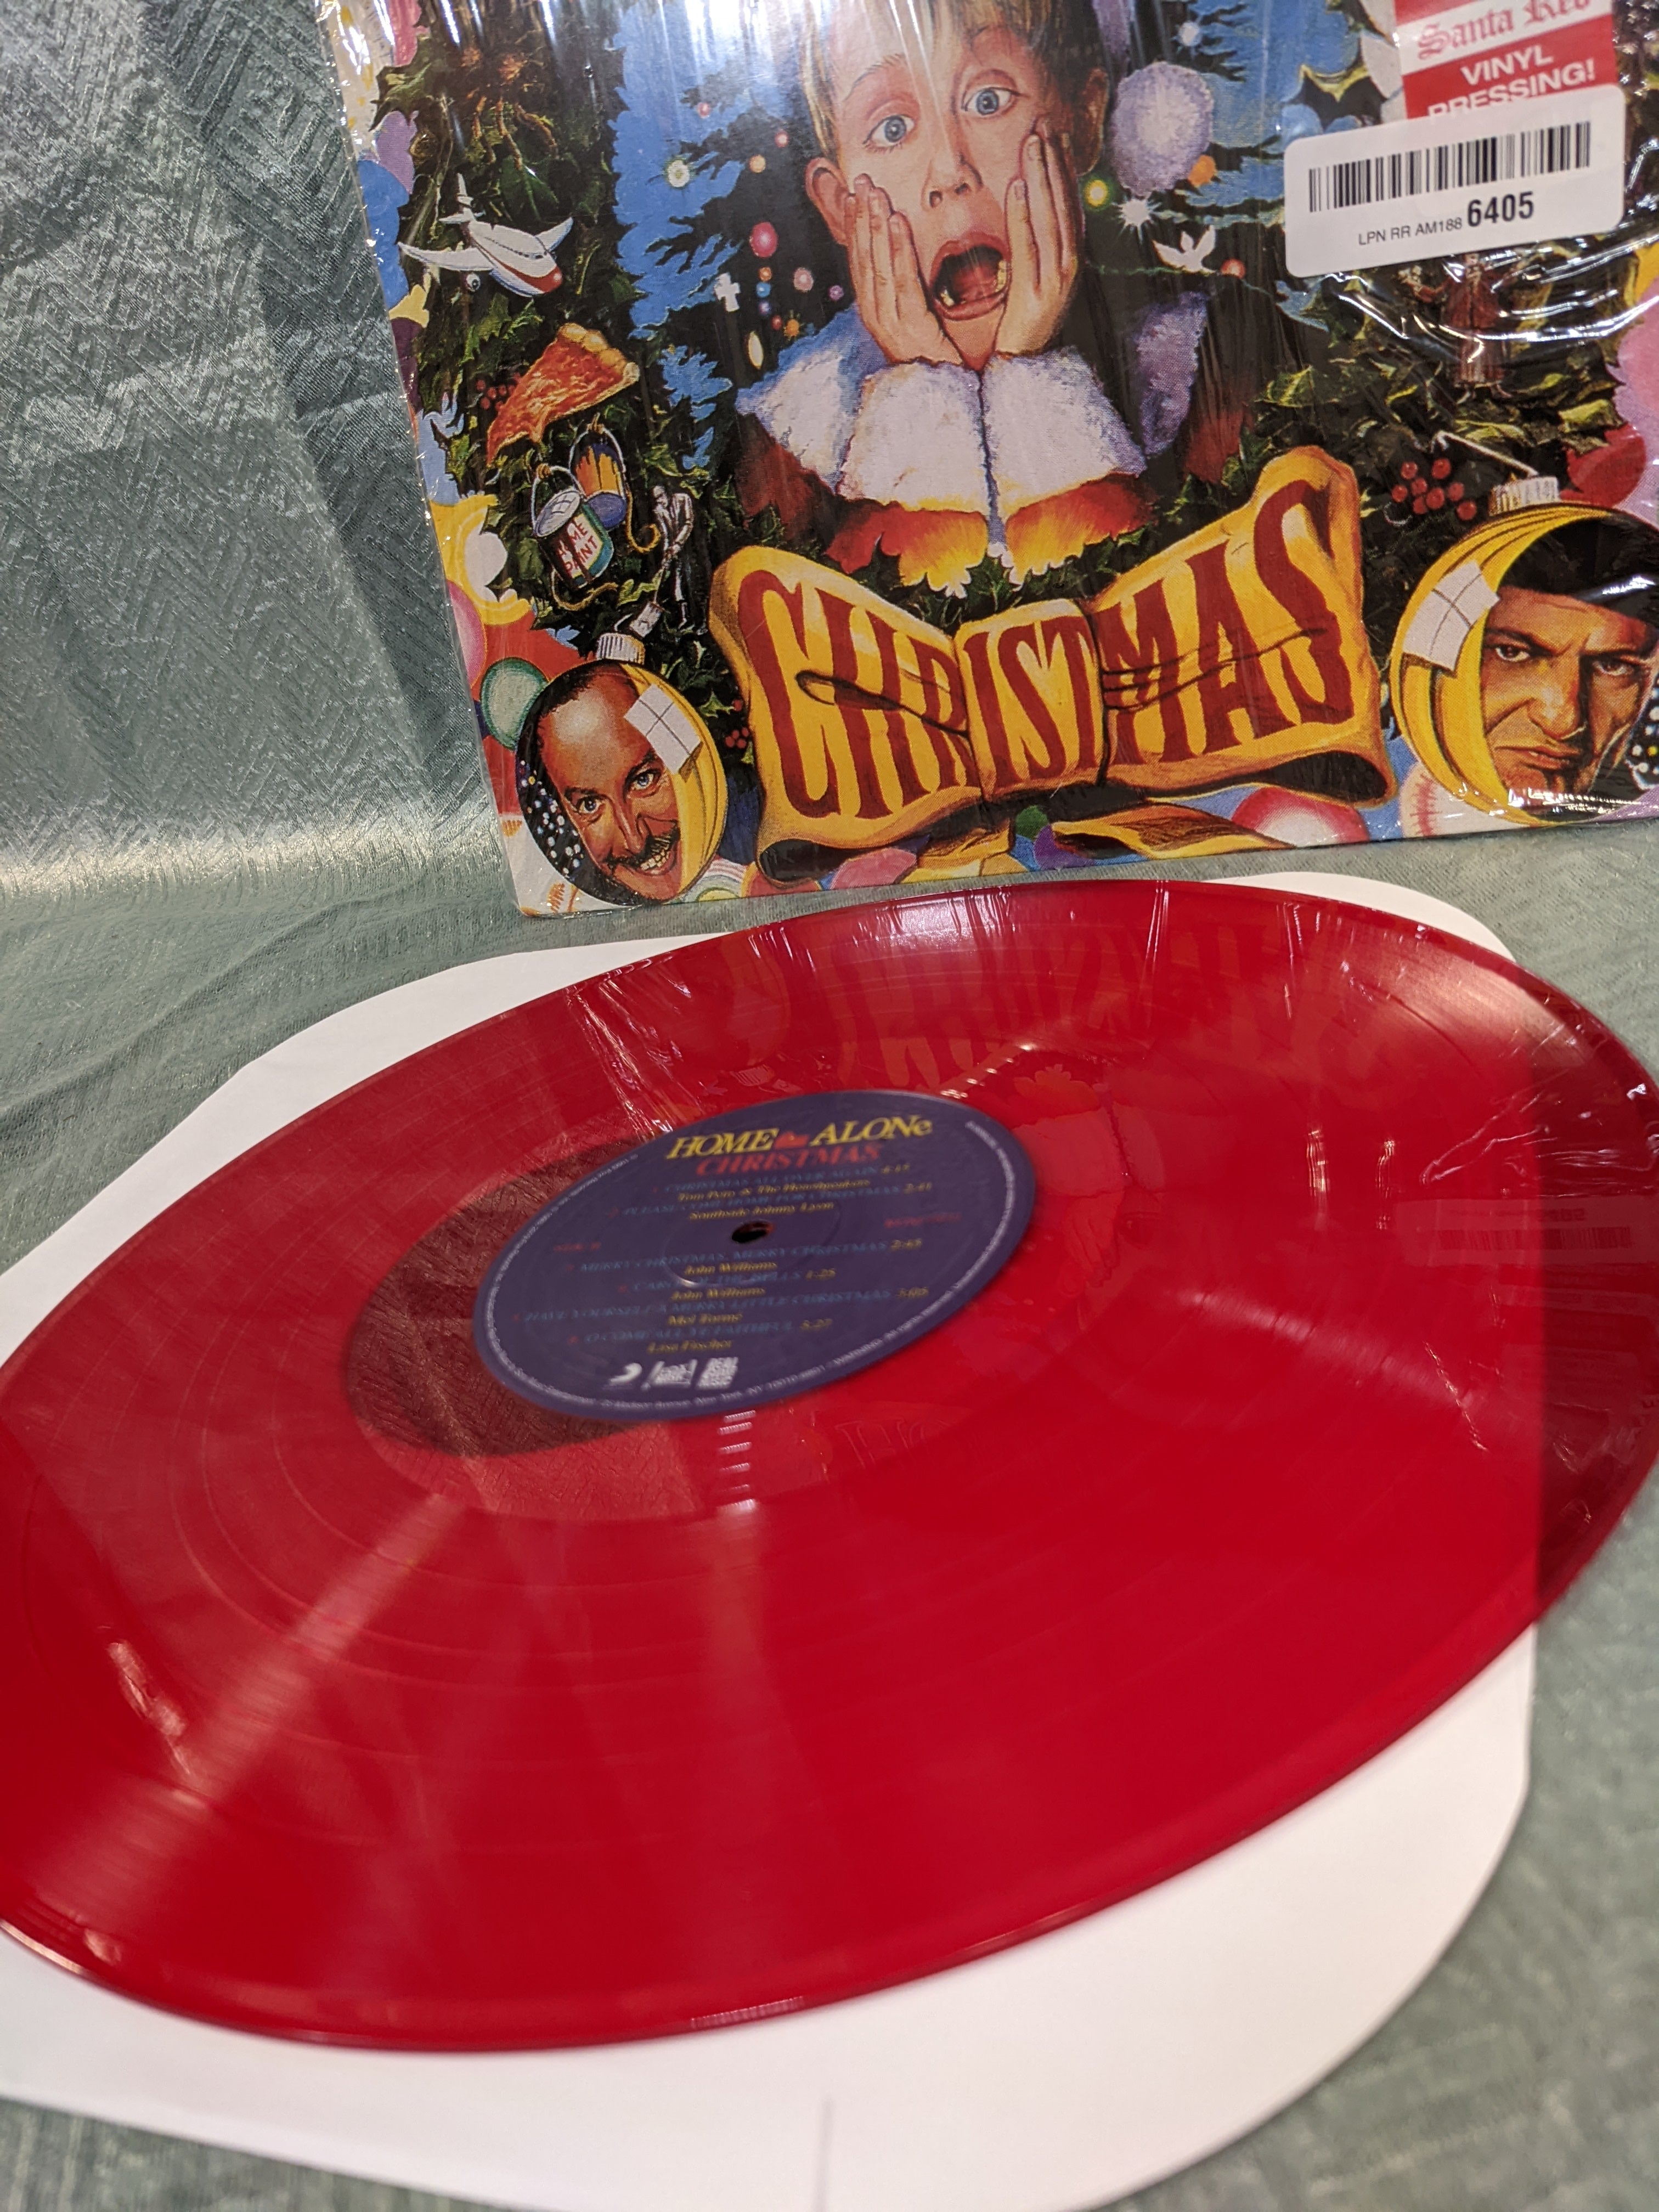 Home Alone Christmas - Exclusive Limited Edition Christmas Slush Colored Vinyl Soundtrack LP (7579983577326)